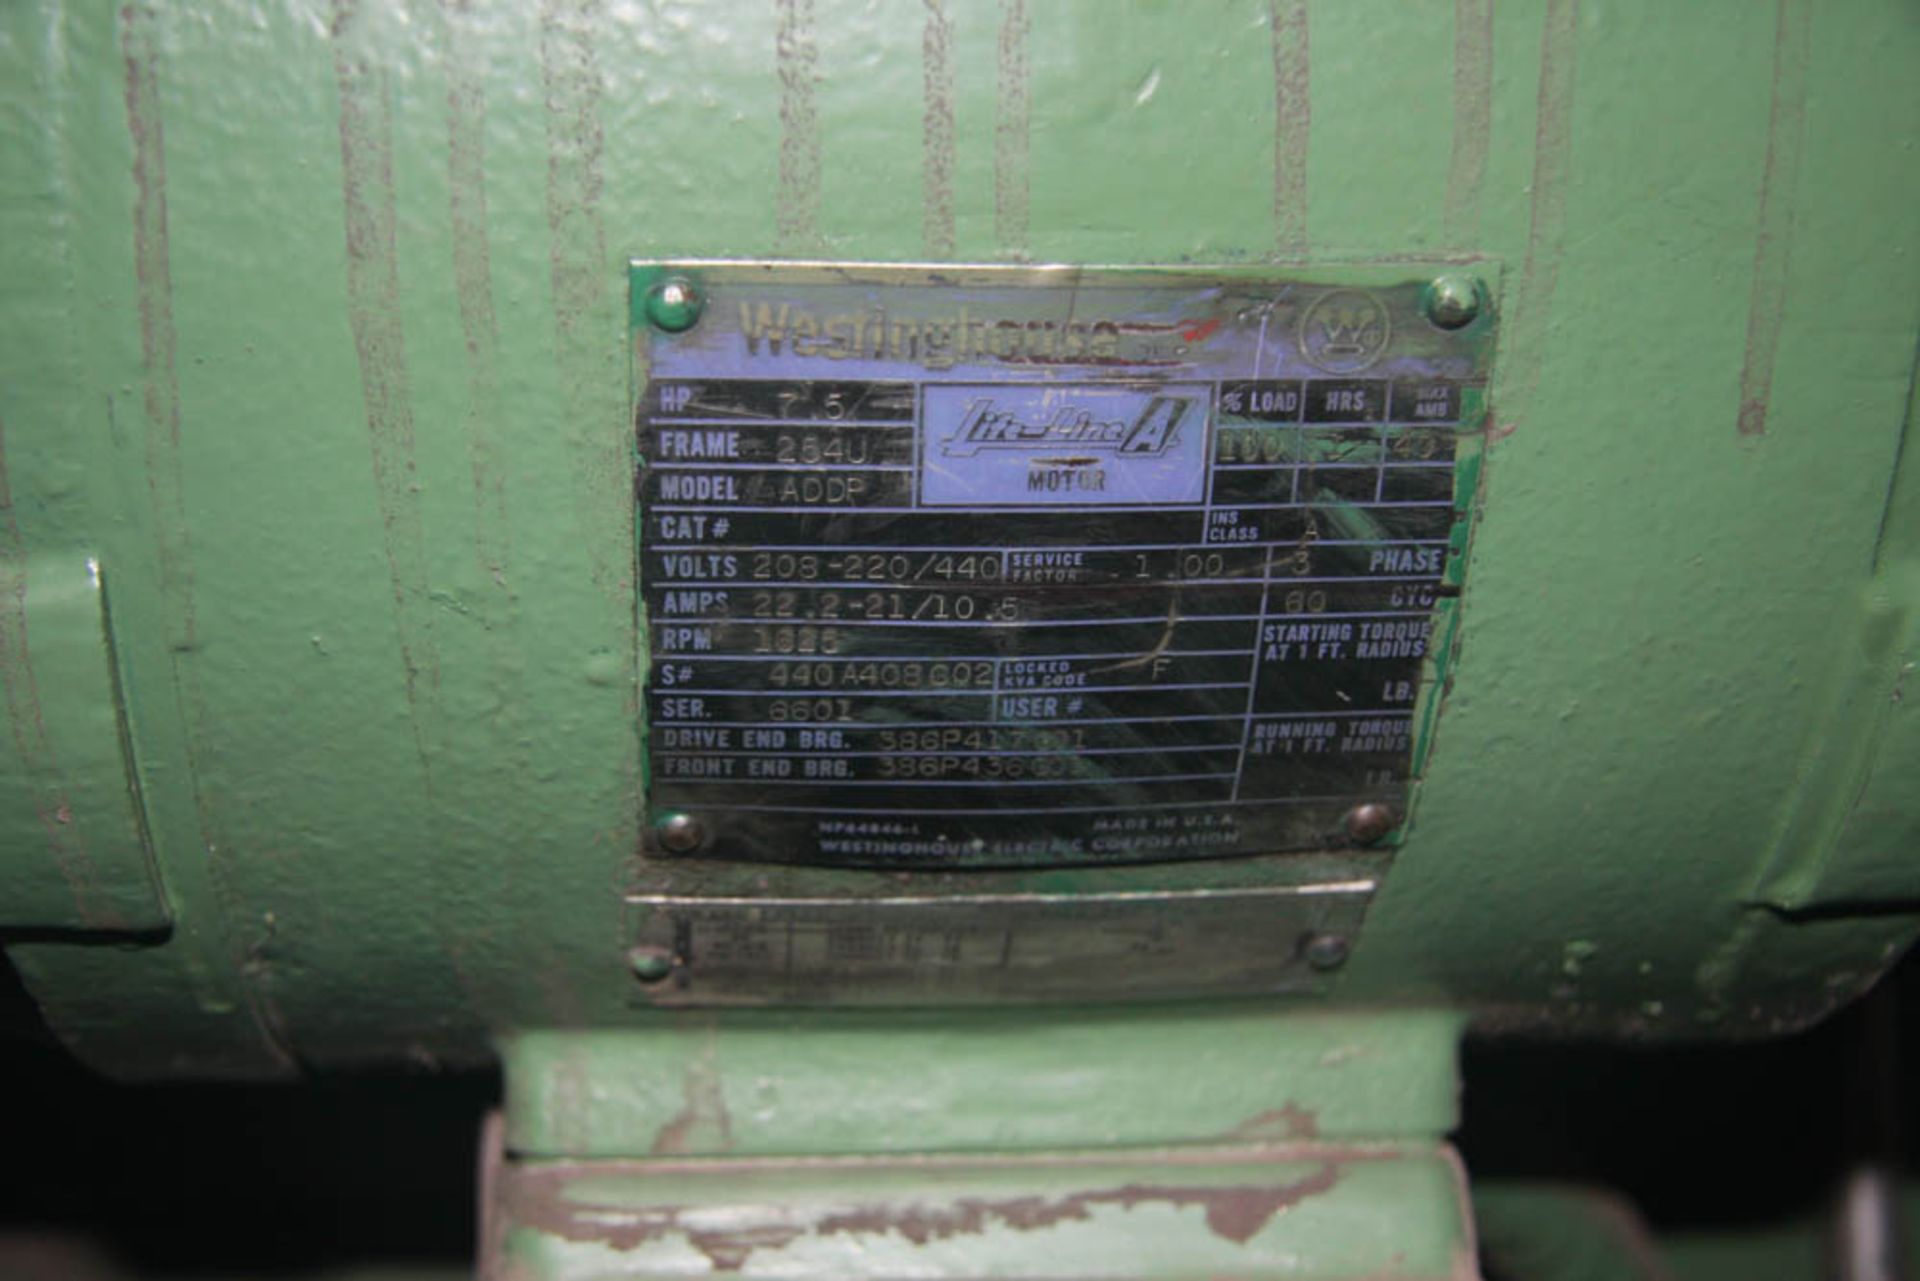 3/16" X 10' CINCINNATI MDL. 1410 GAP FRAME MECHANICAL POWER SHEAR, W/ 18" GAP, 36" FRONT OPERATED - Image 11 of 14